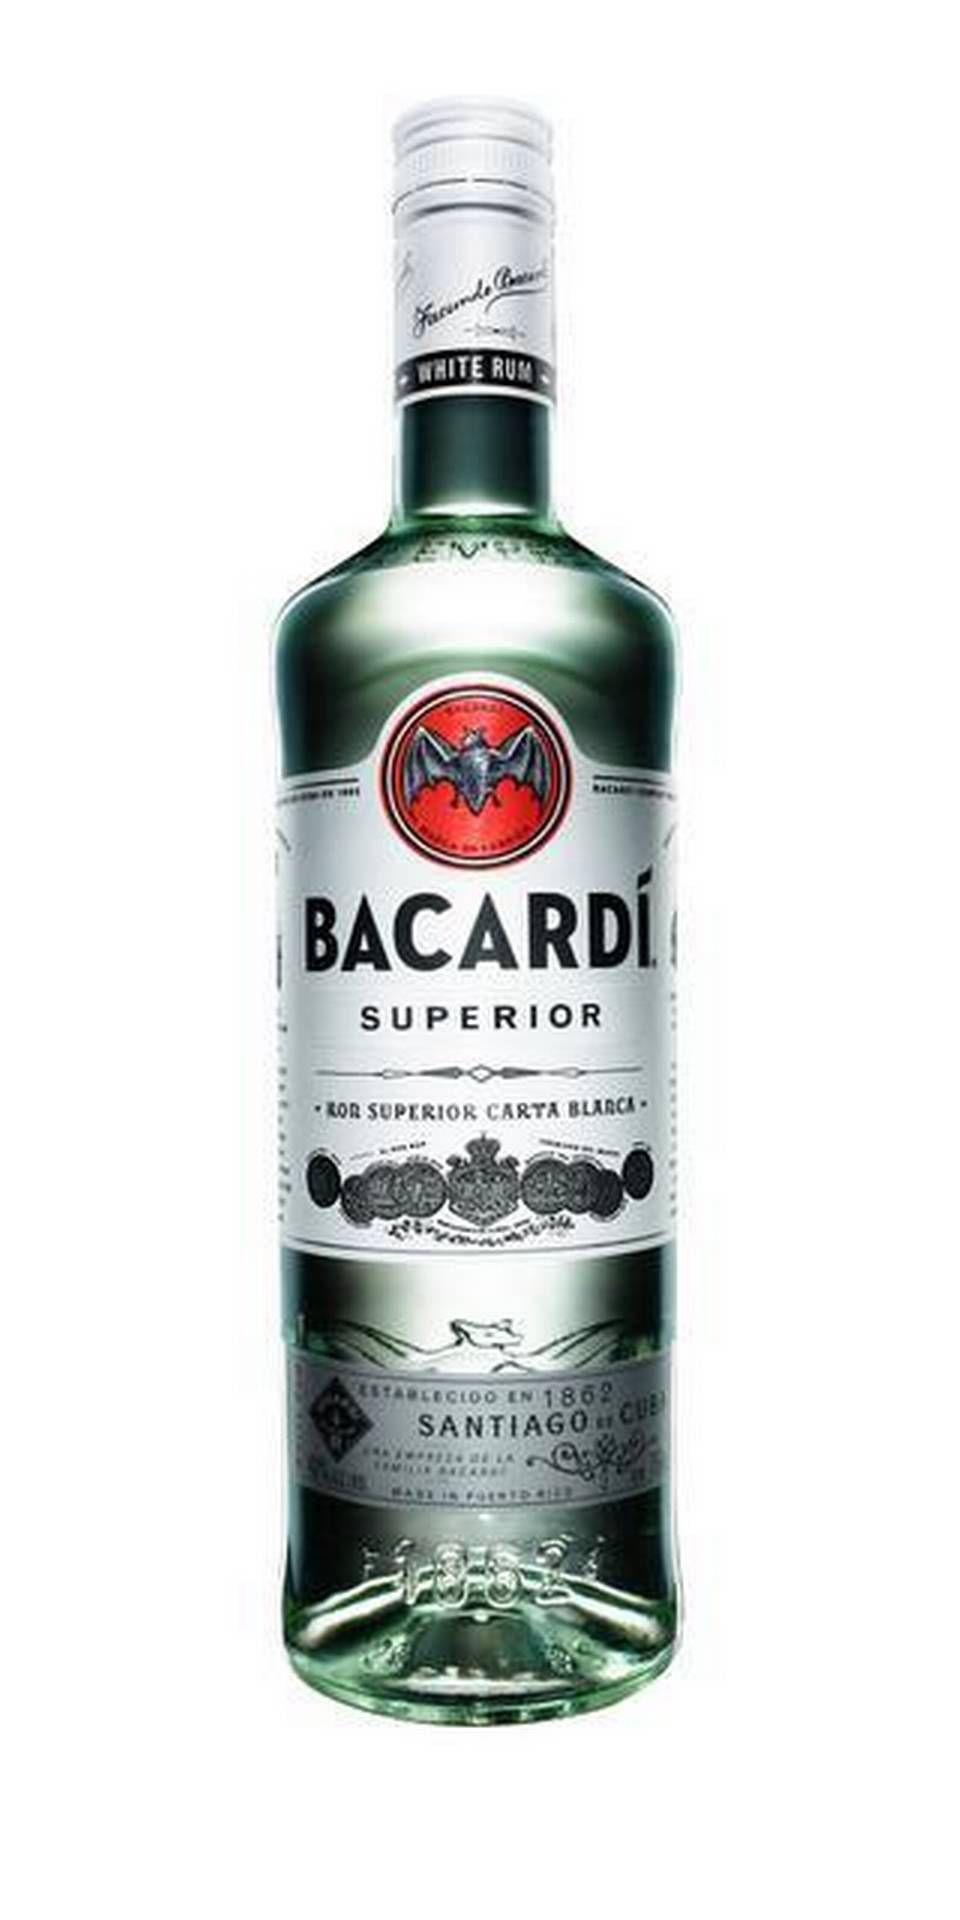 New Bacardi Bottle Logo - Bacardi Rum's packaging design has Art Deco flavor | Miami Herald